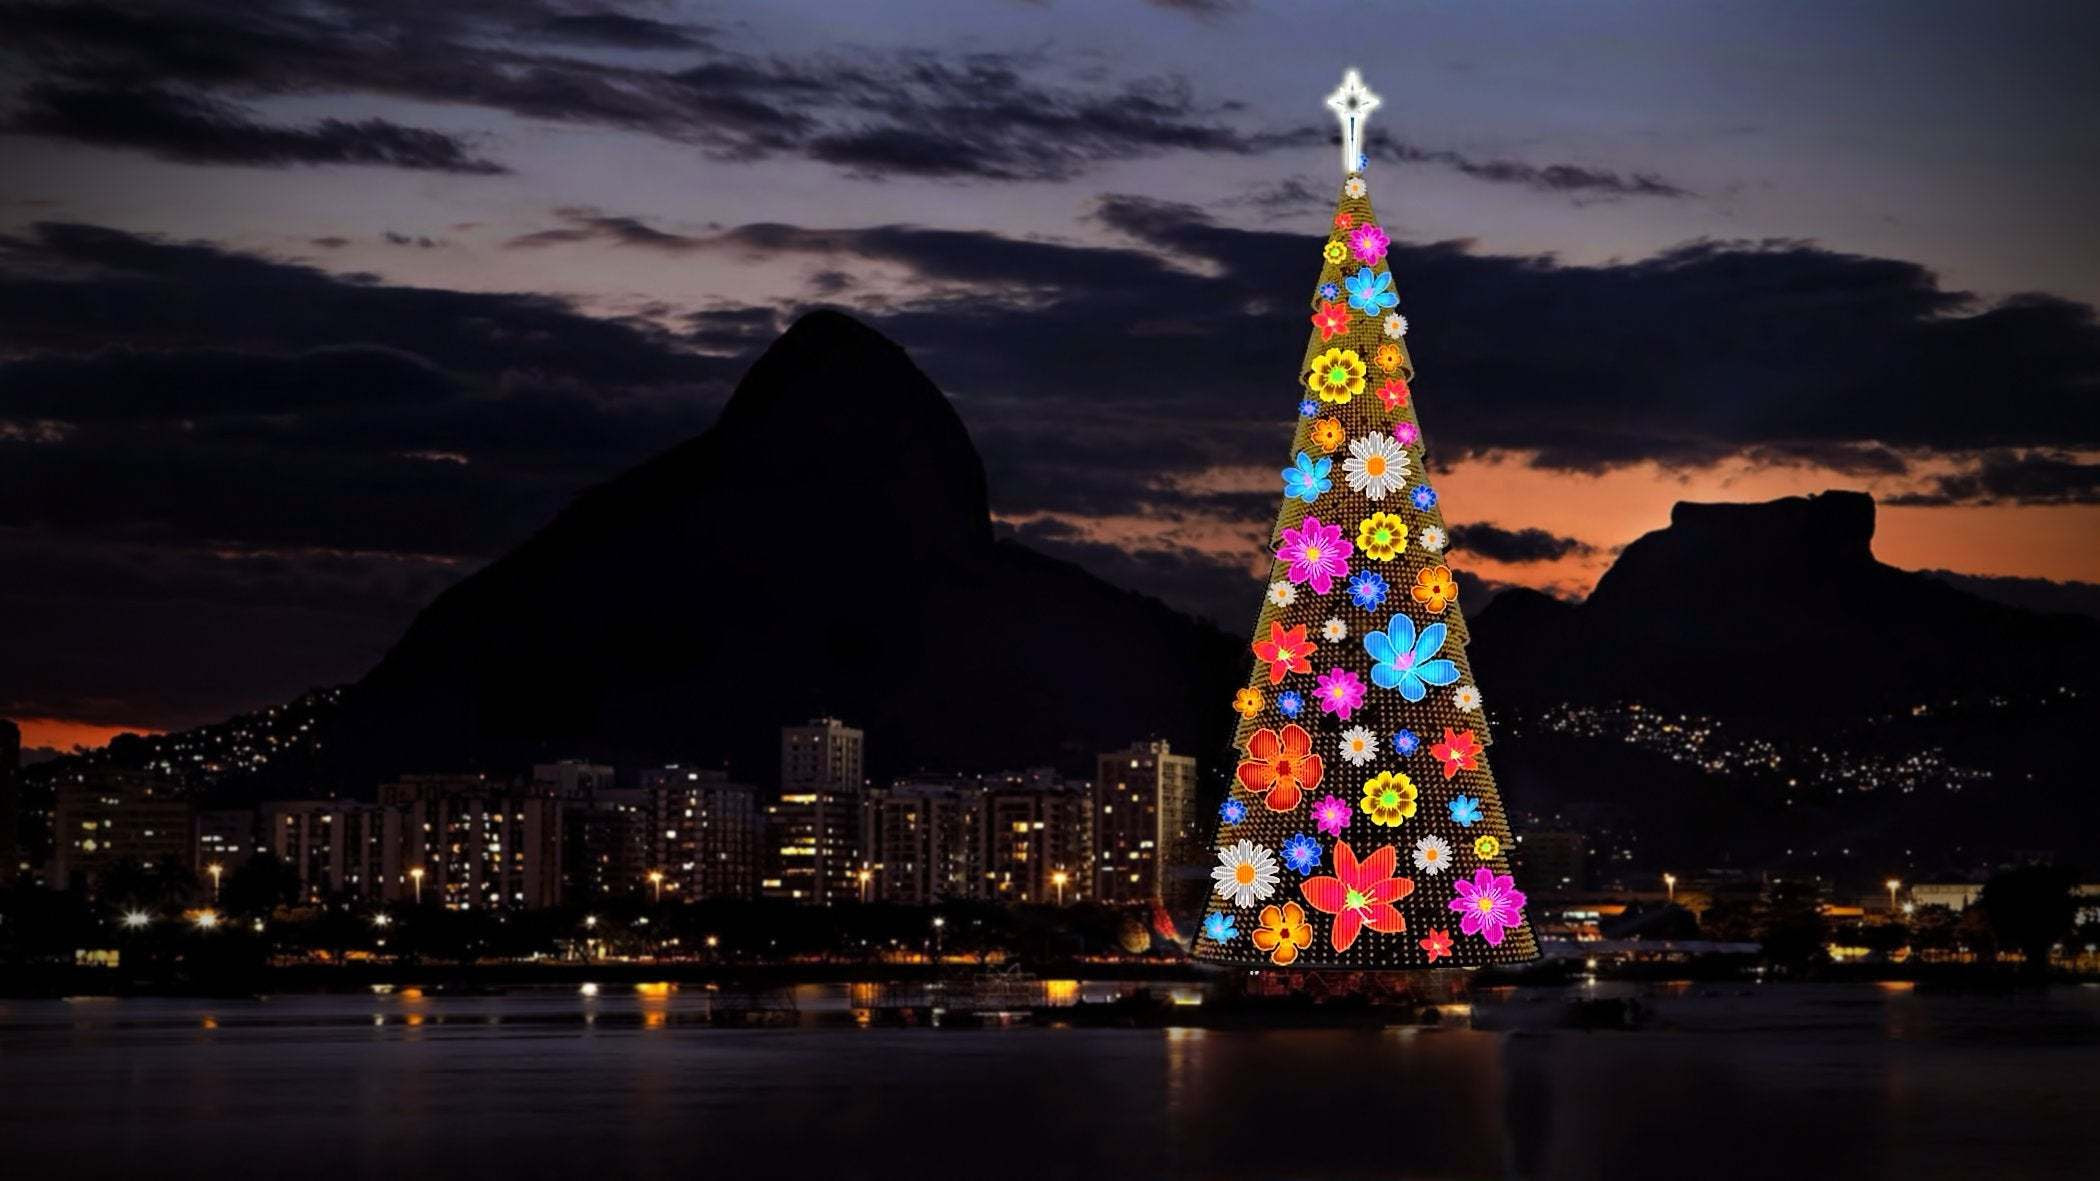 El árbol flotante de Río de Janeiro, iluminado.